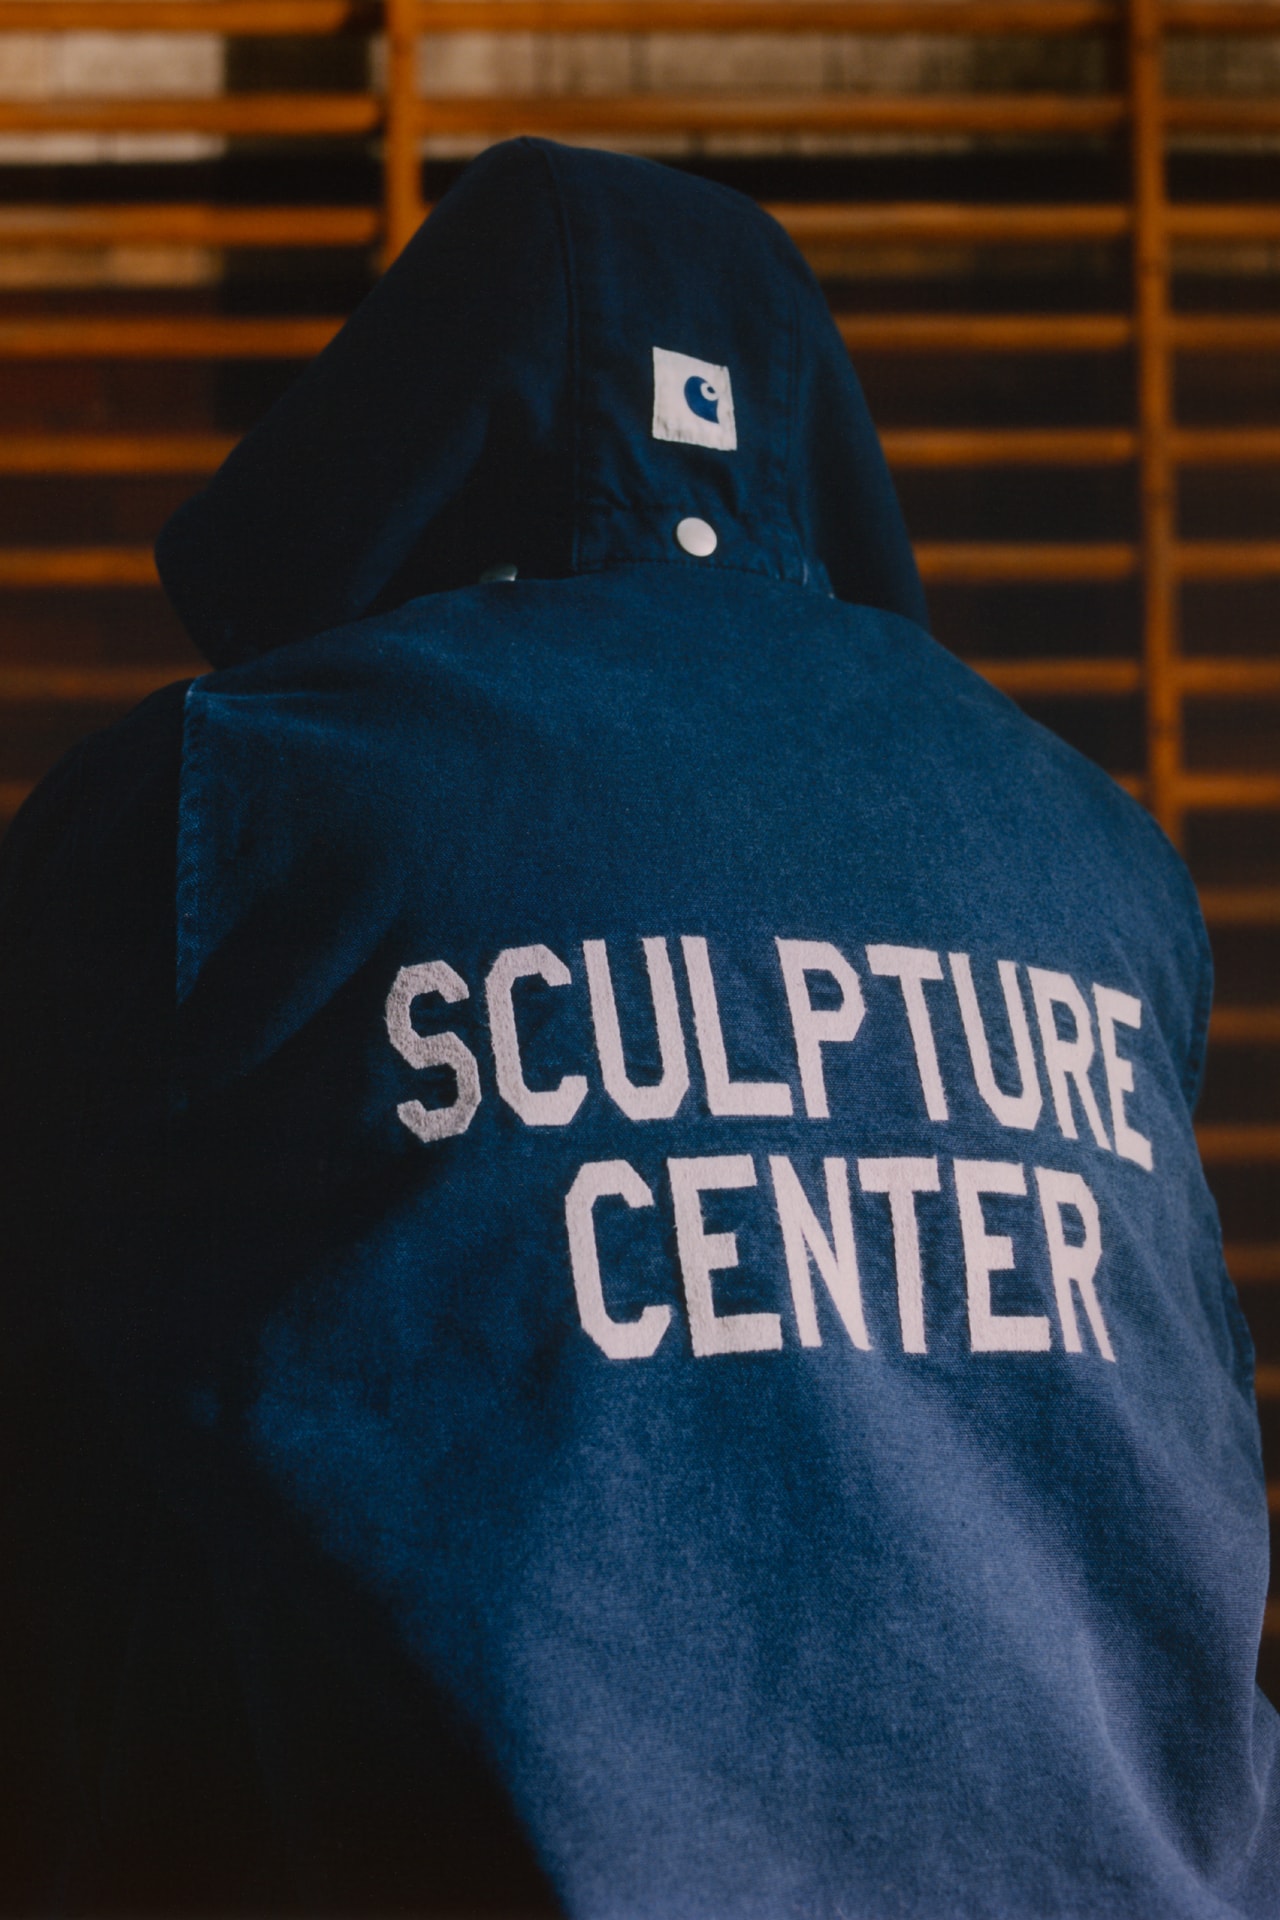 Carhartt WIP New Balance 990v1 Nalgene Sculpture Center Collaboration